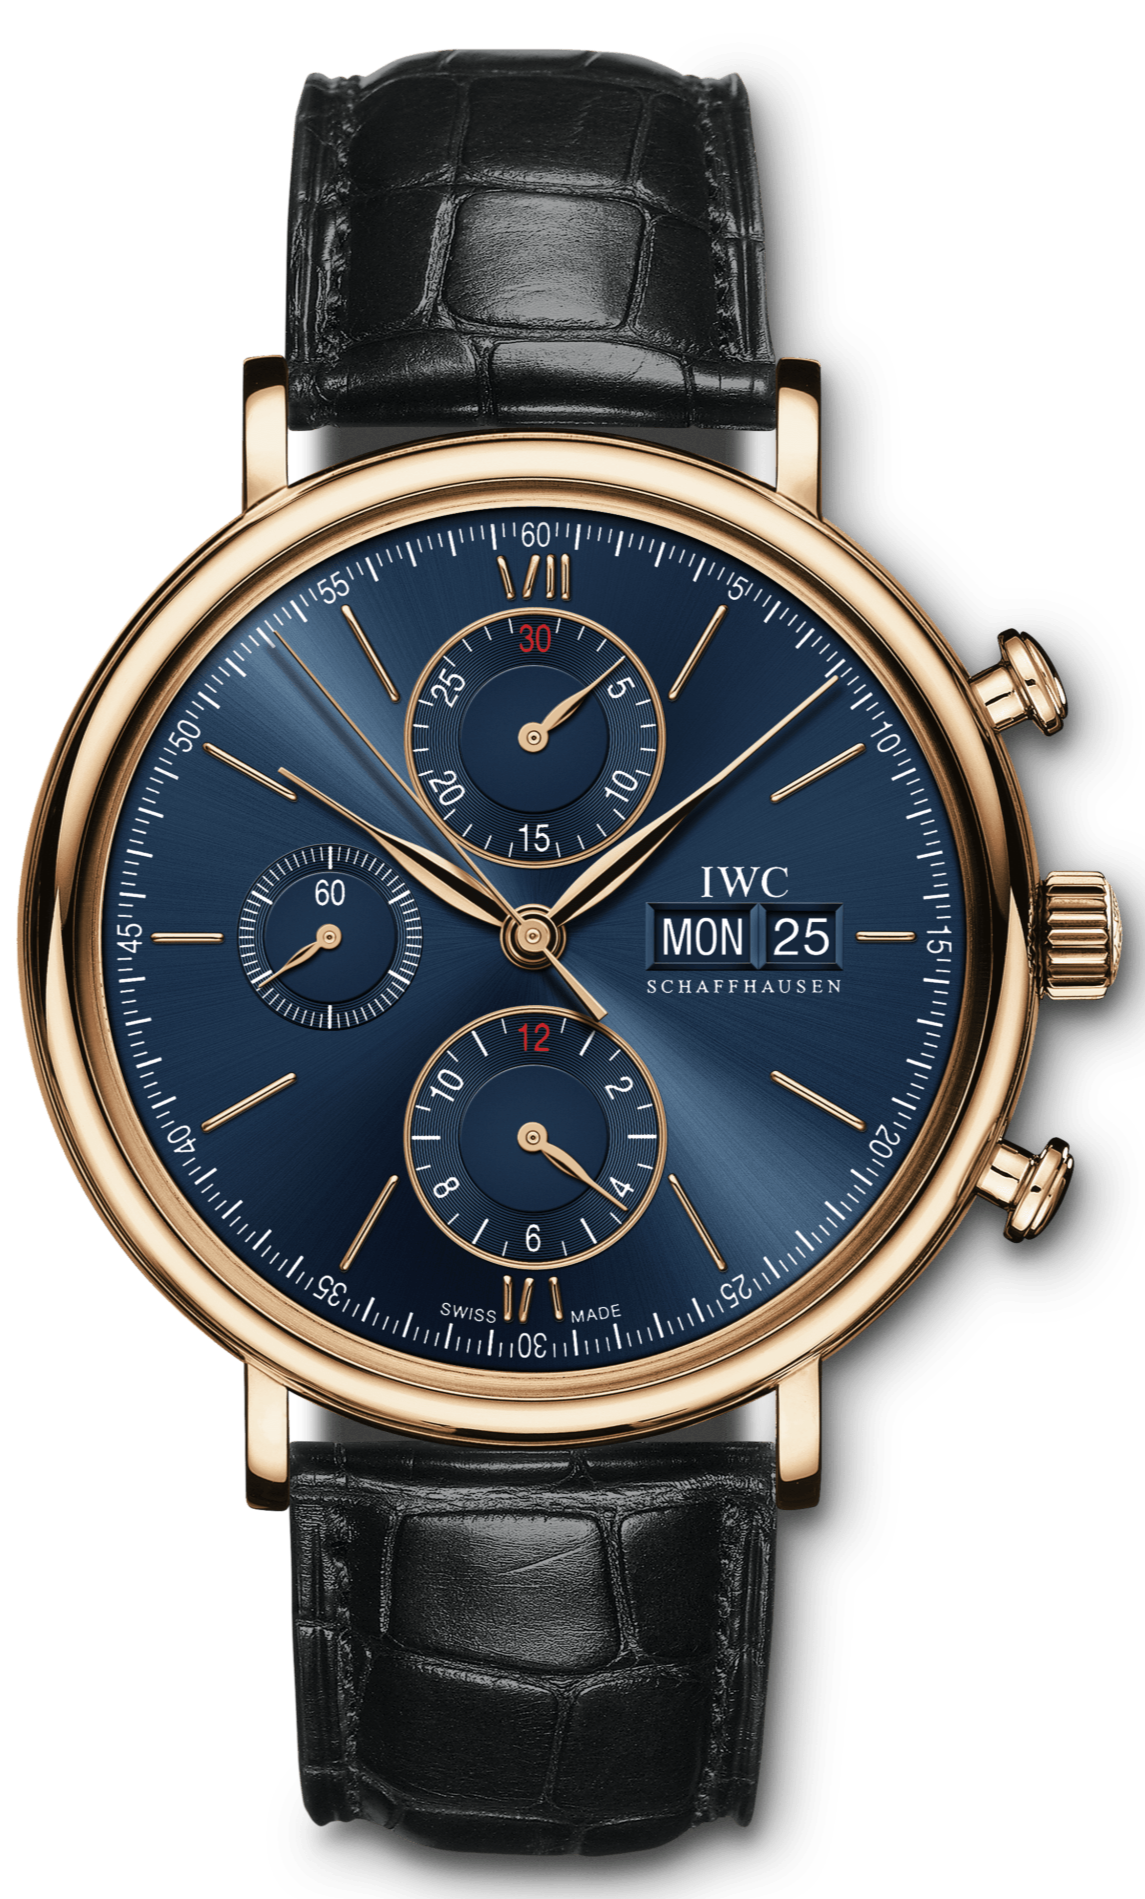 IWC Portofino Chronograph Blue Dial Black Leather Strap Watch for Men - IW391035